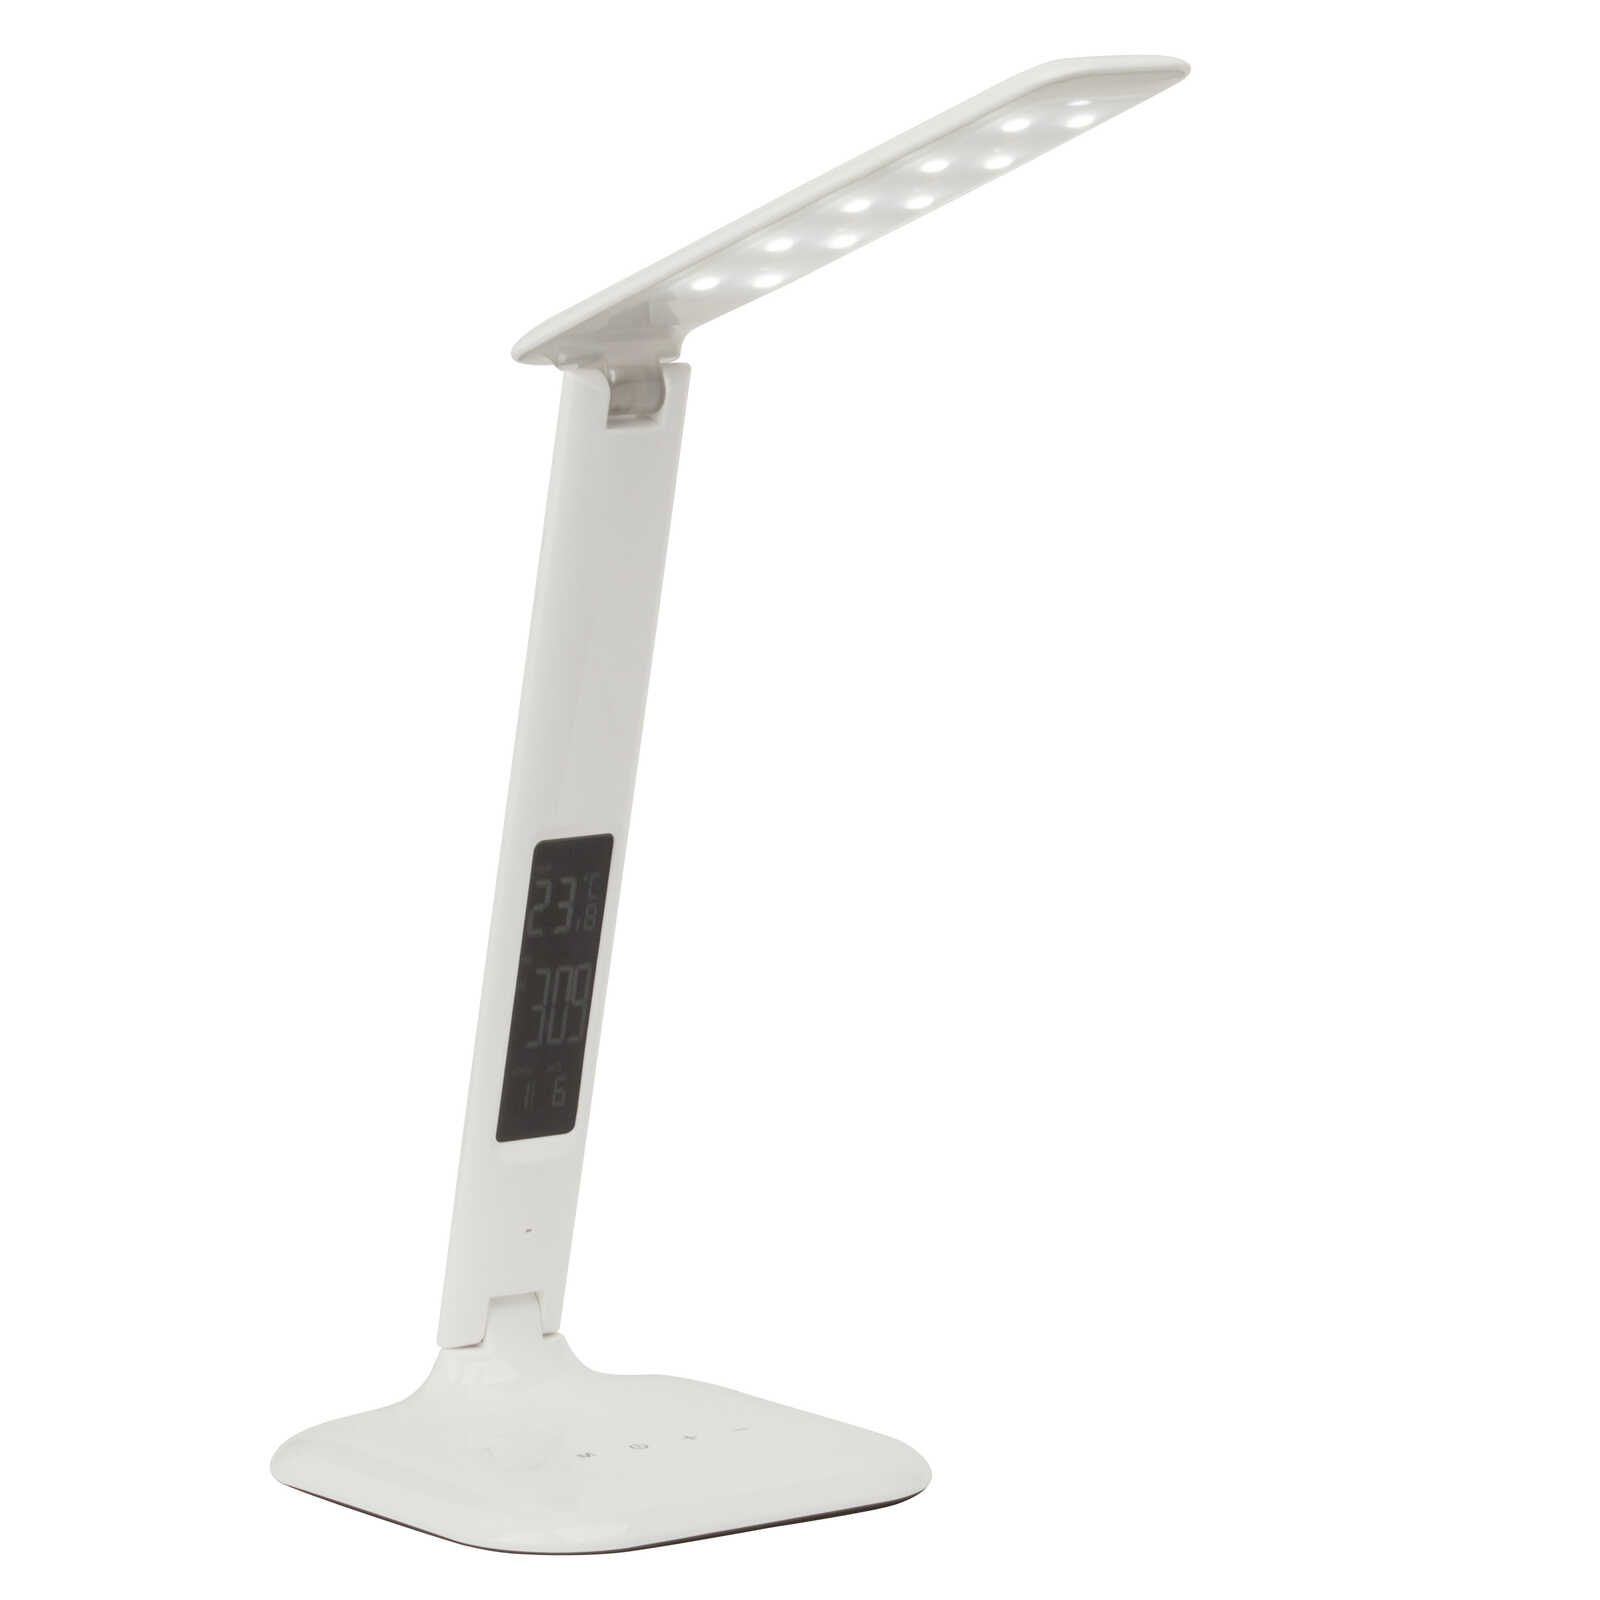             Lampe de table en plastique - Hugo 1 - Blanc
        